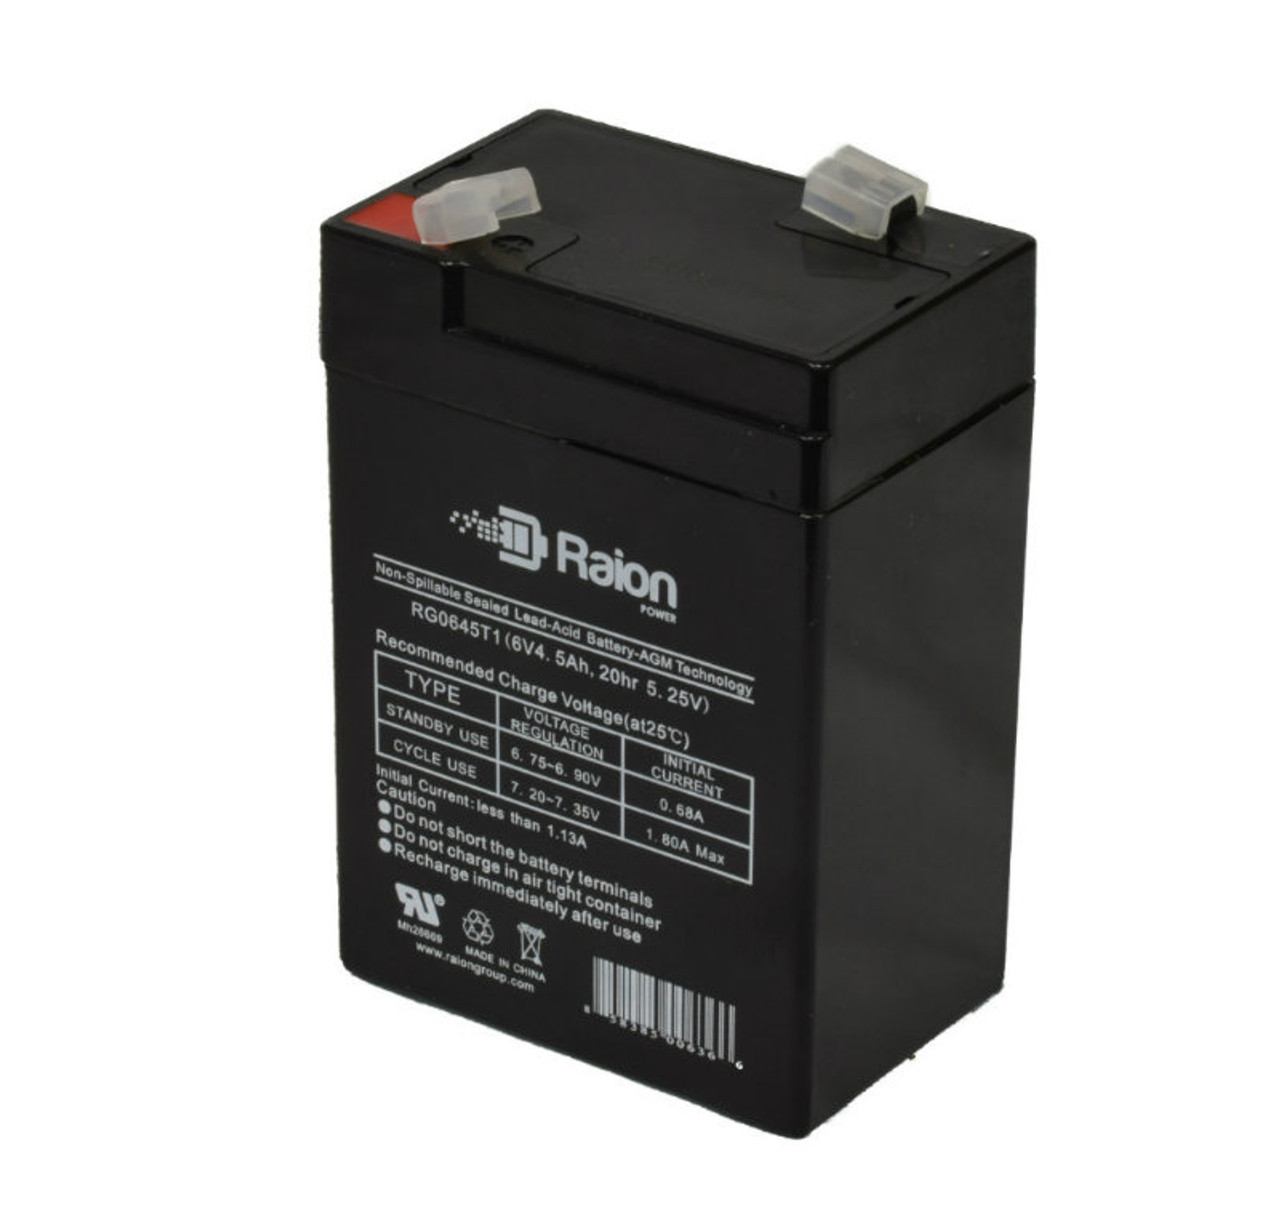 Raion Power RG0645T1 6V 4.5Ah Replacement Battery Cartridge for Fuli FL635